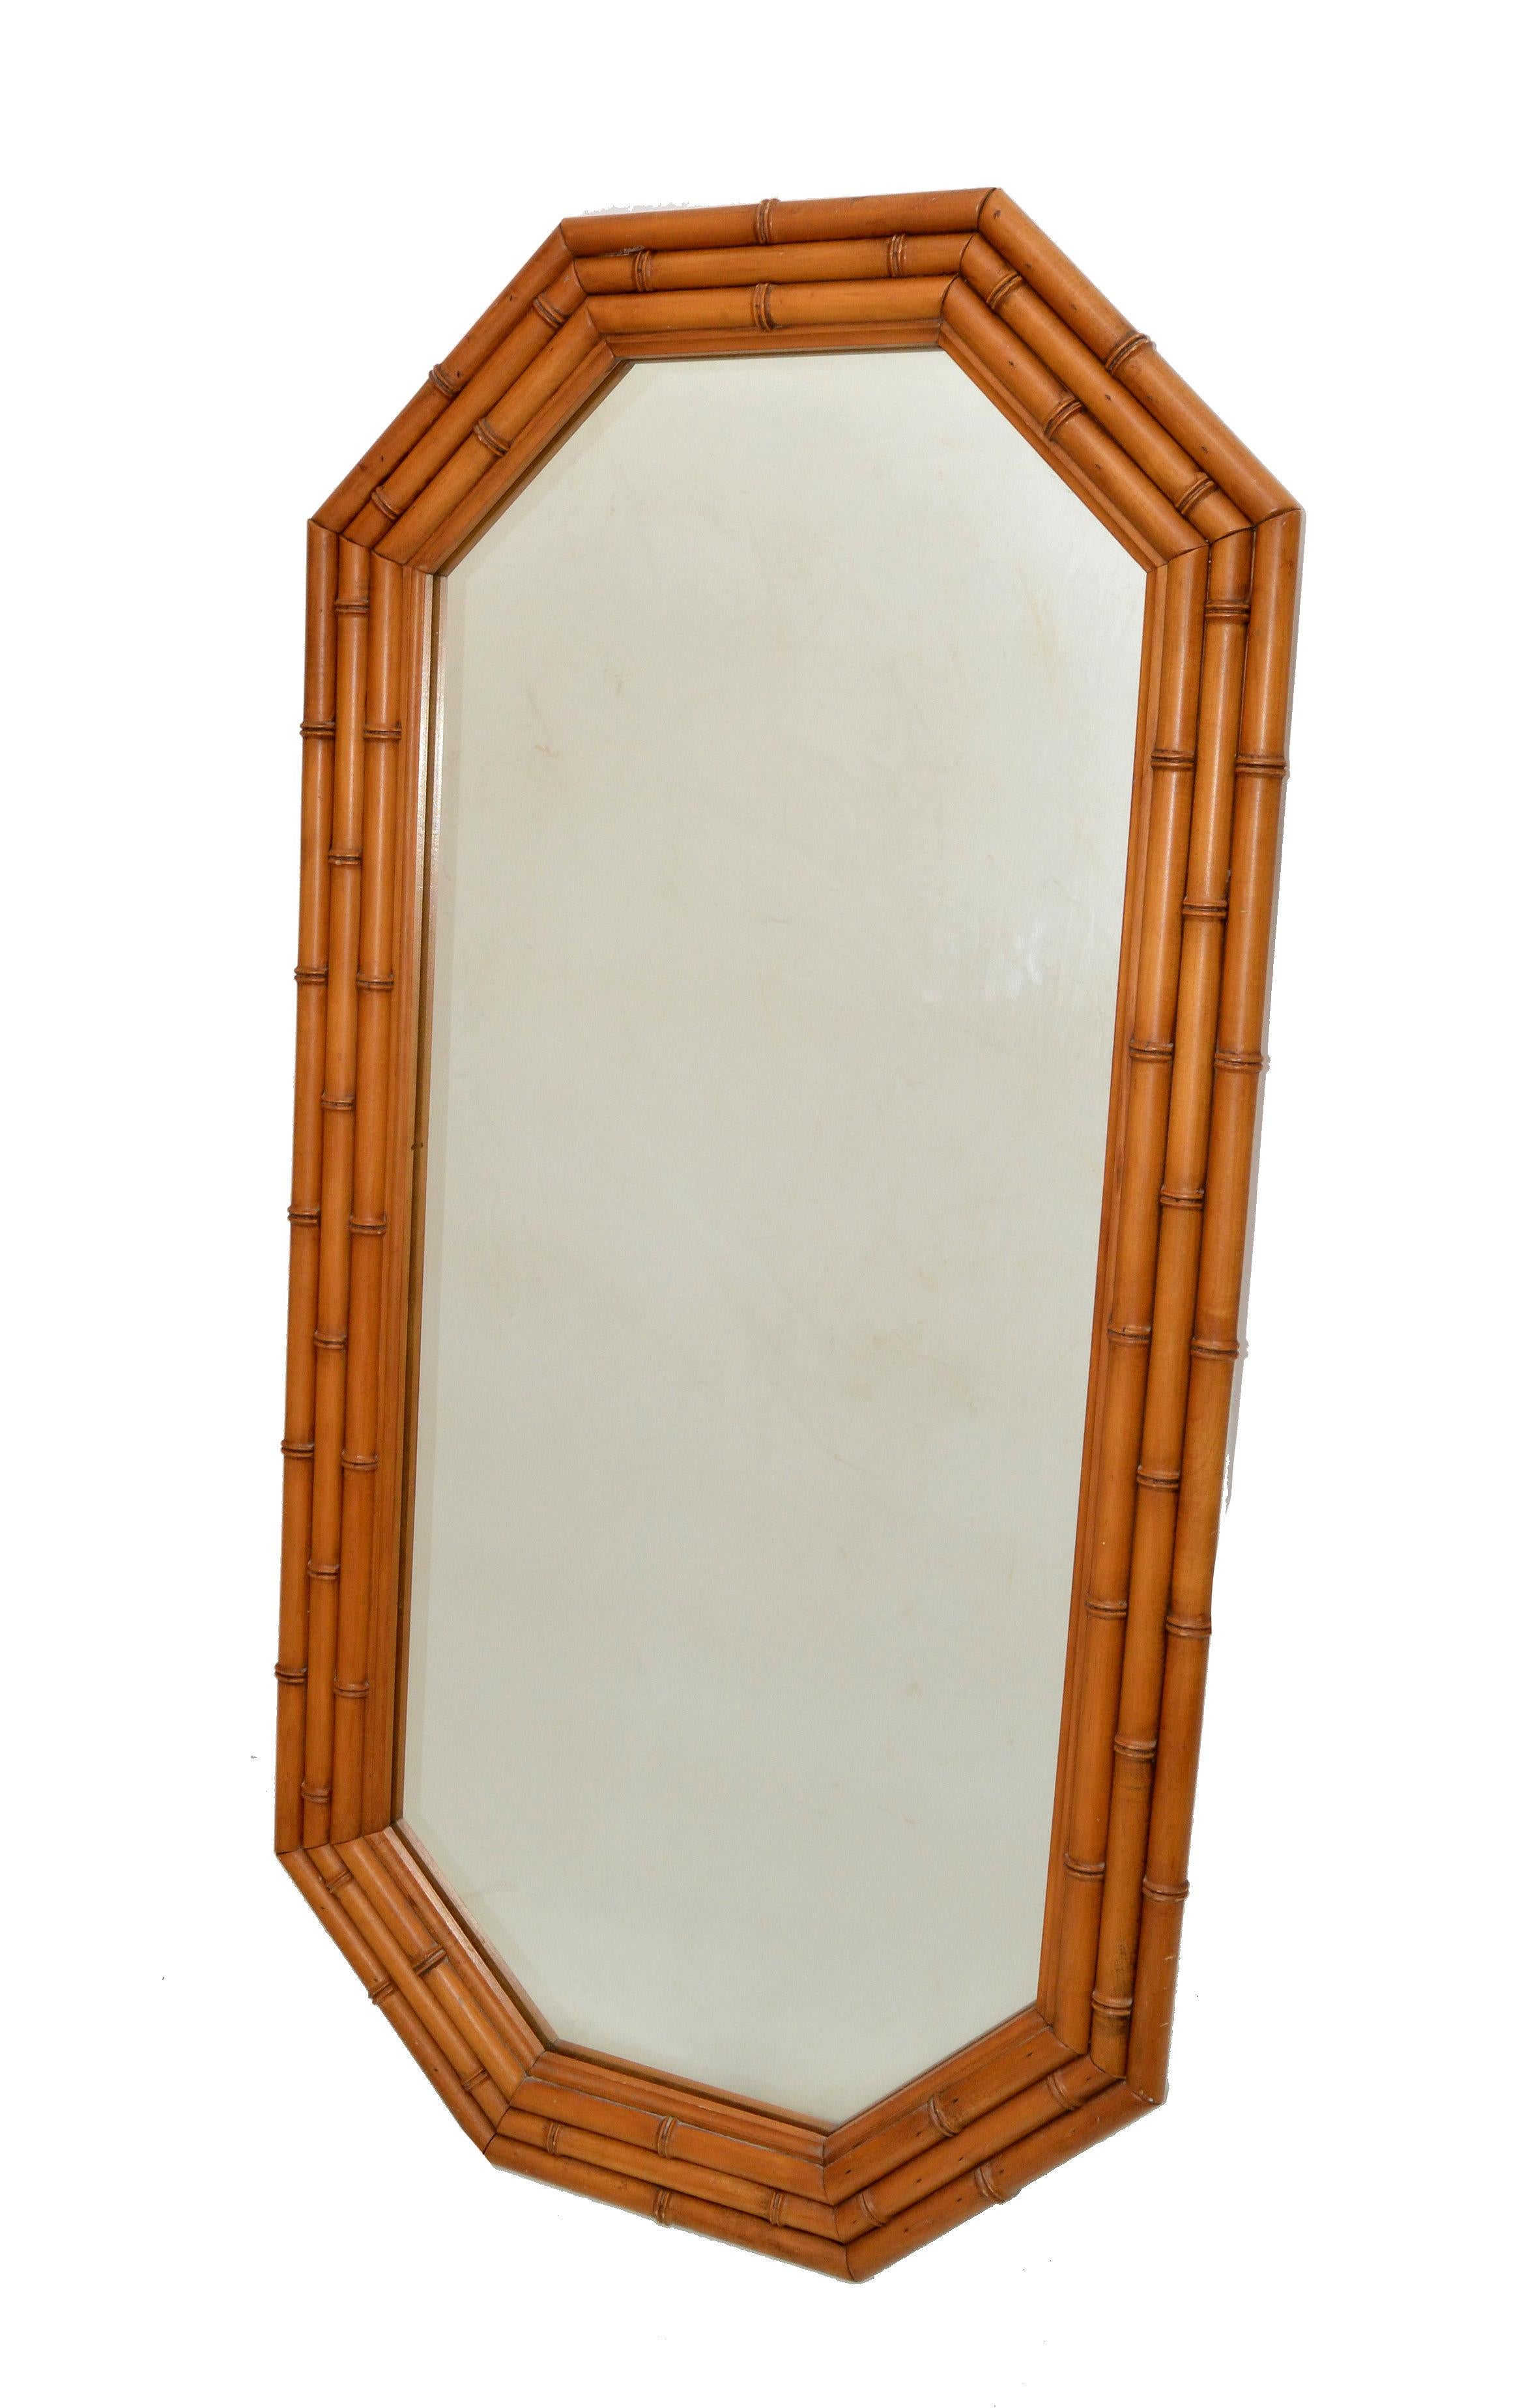 wooden bamboo mirror